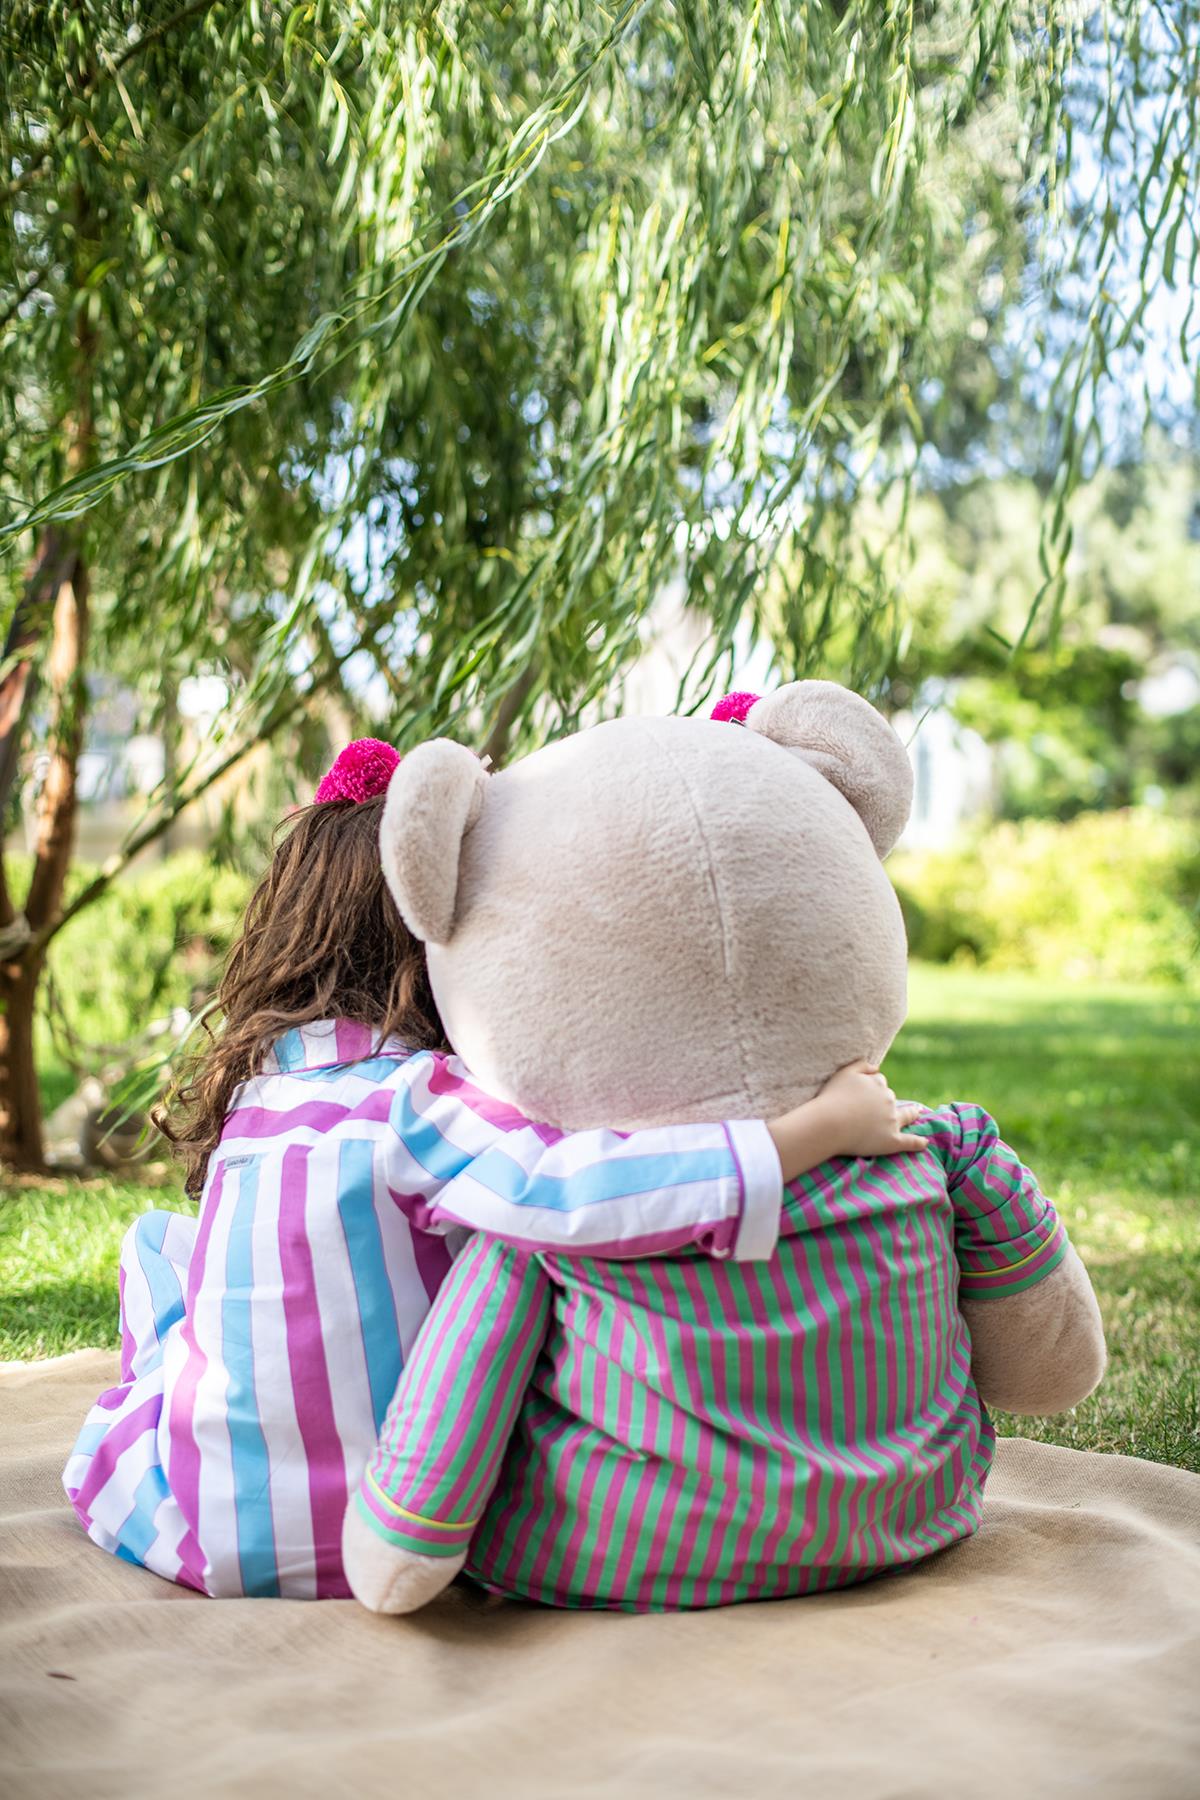 Alice Pyjama Set with Matching Teddy Bear